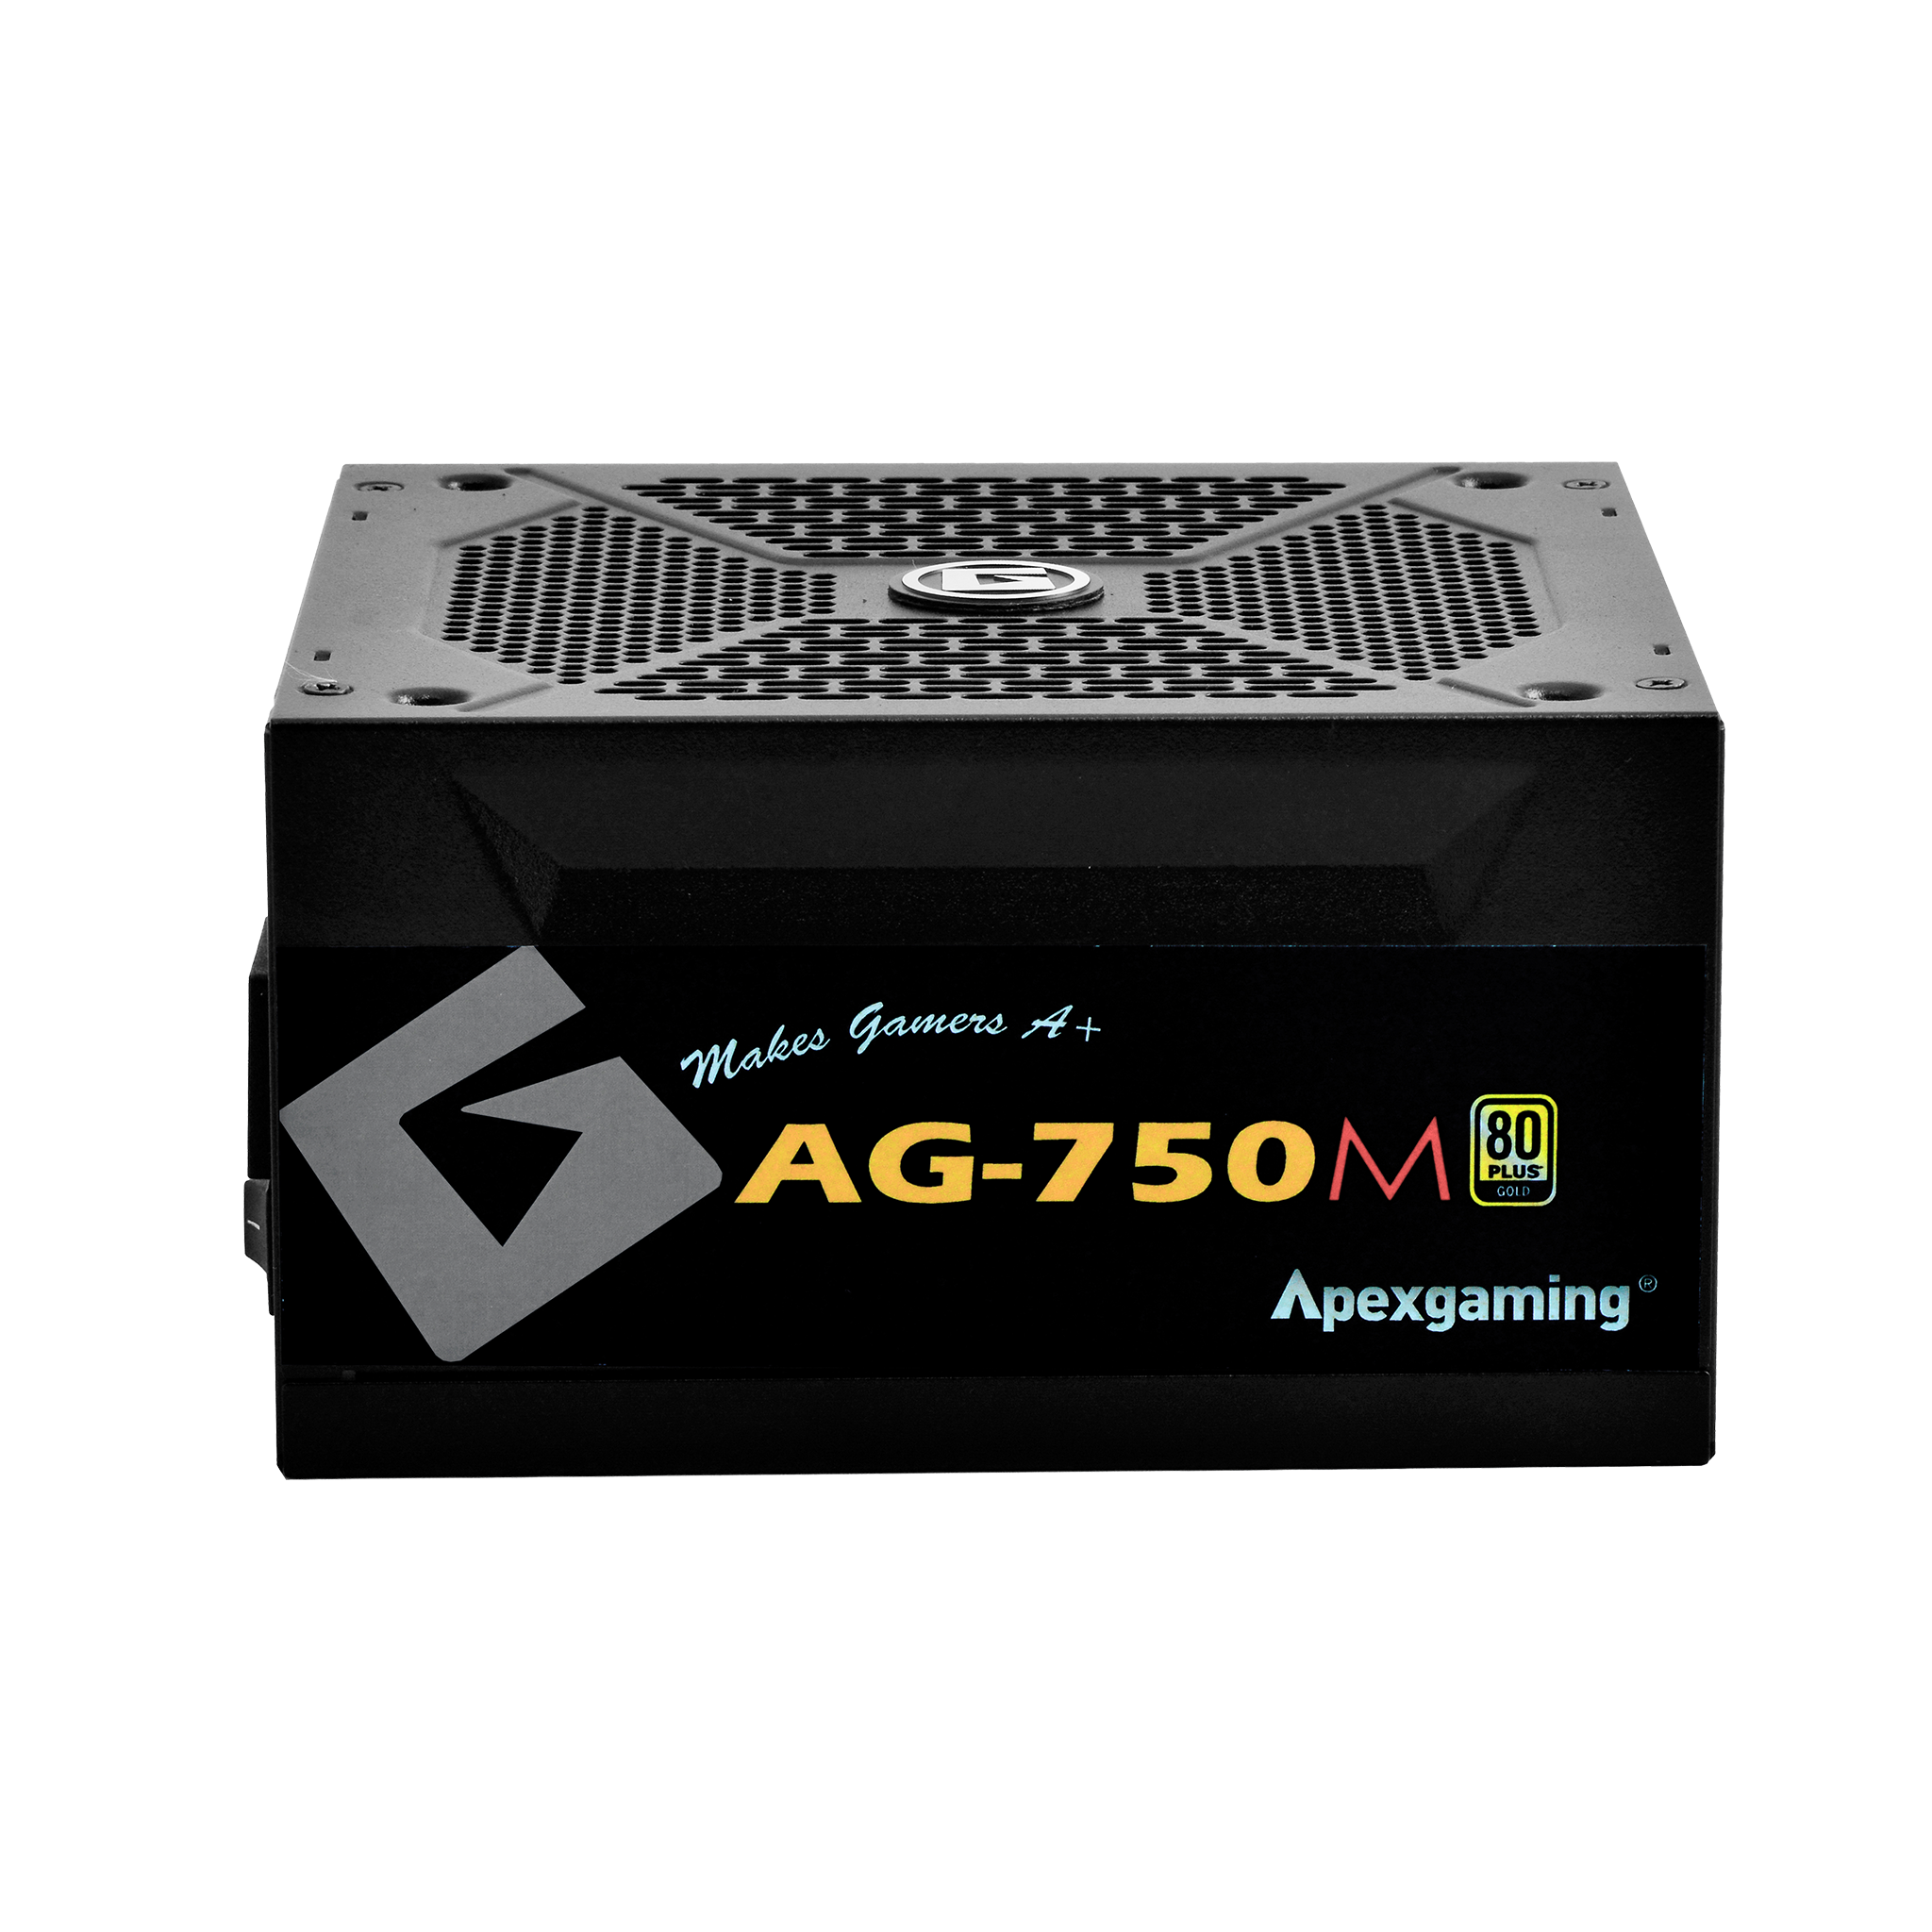 Apexgaming AG-750M 750Watt 80 Plus Gold Fully Modular Power Supply copy